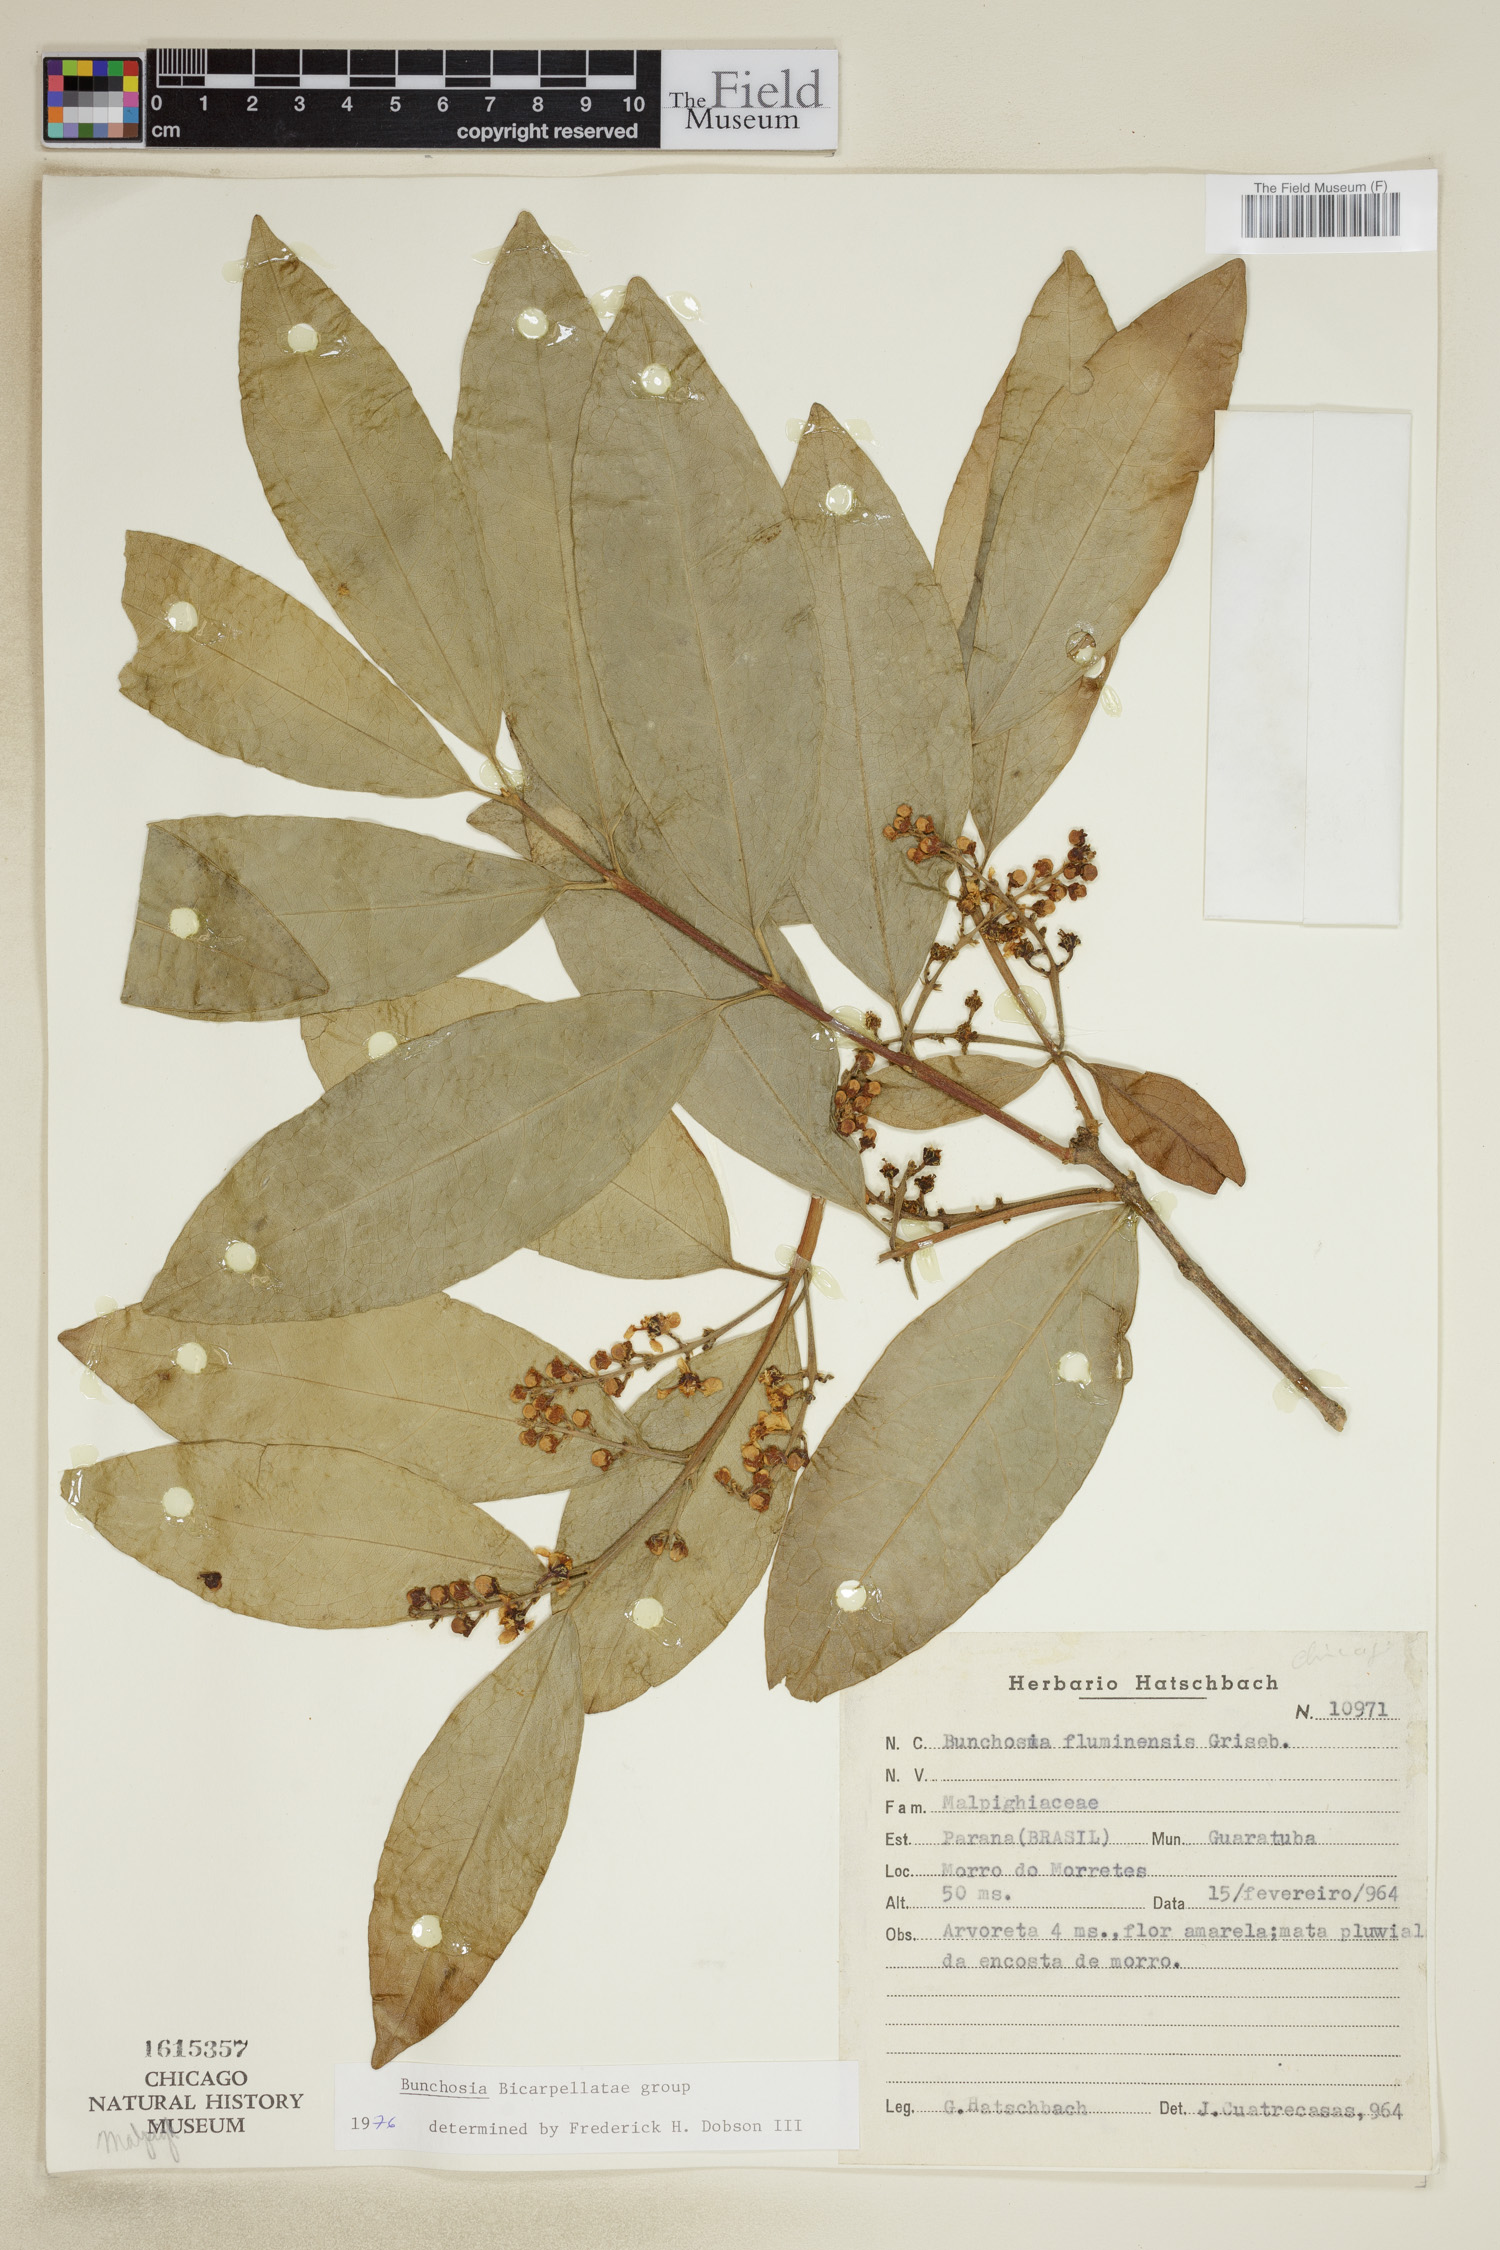 Bunchosia fluminensis image